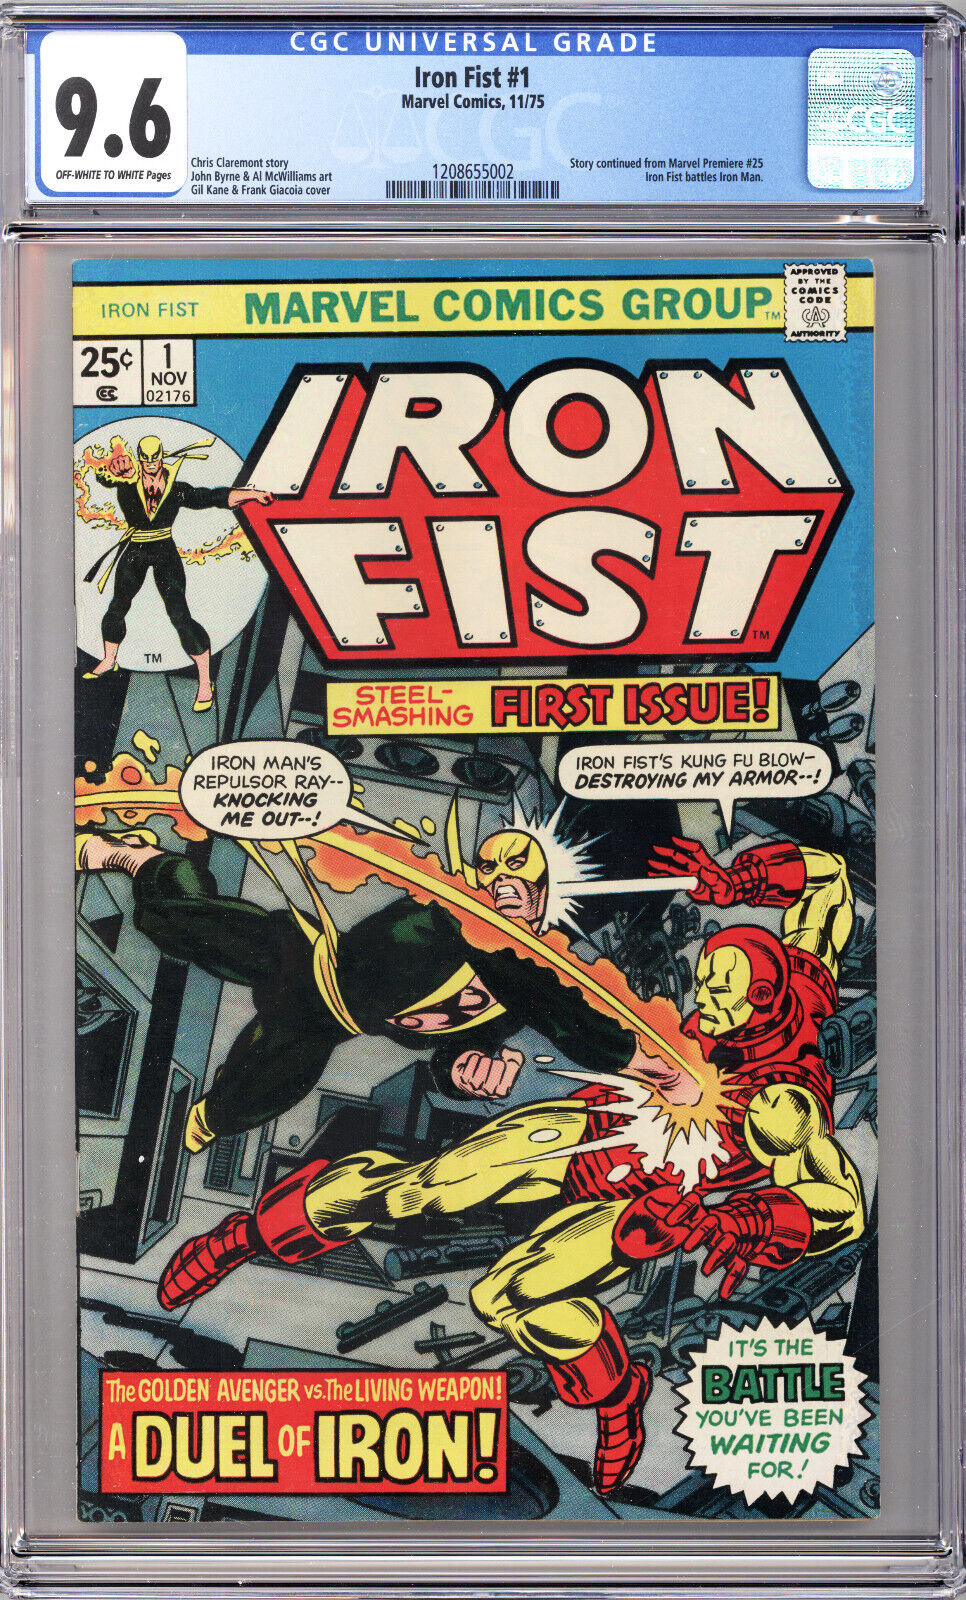 IRON FIST #1 CGC 9.6 NM+ Bronze Age Marvel Comics BYRNE Gil Kane Iron Man cover